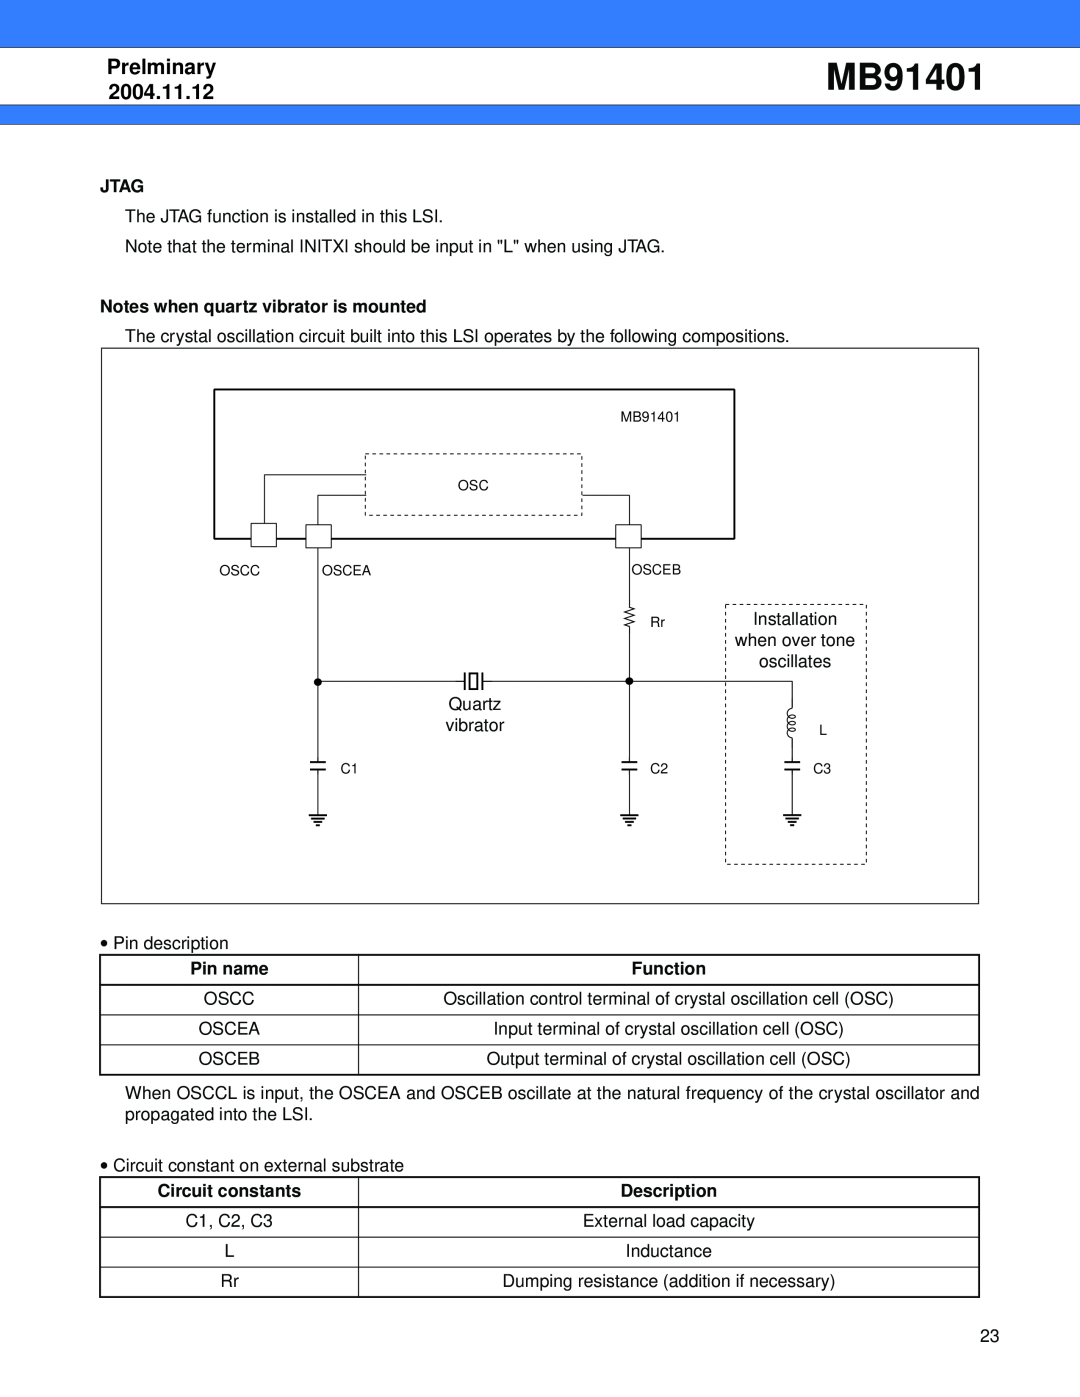 Fujitsu MB91401 manual Jtag, Notes when quartz vibrator is mounted, Function, Circuit constants, Description, Prelminary 